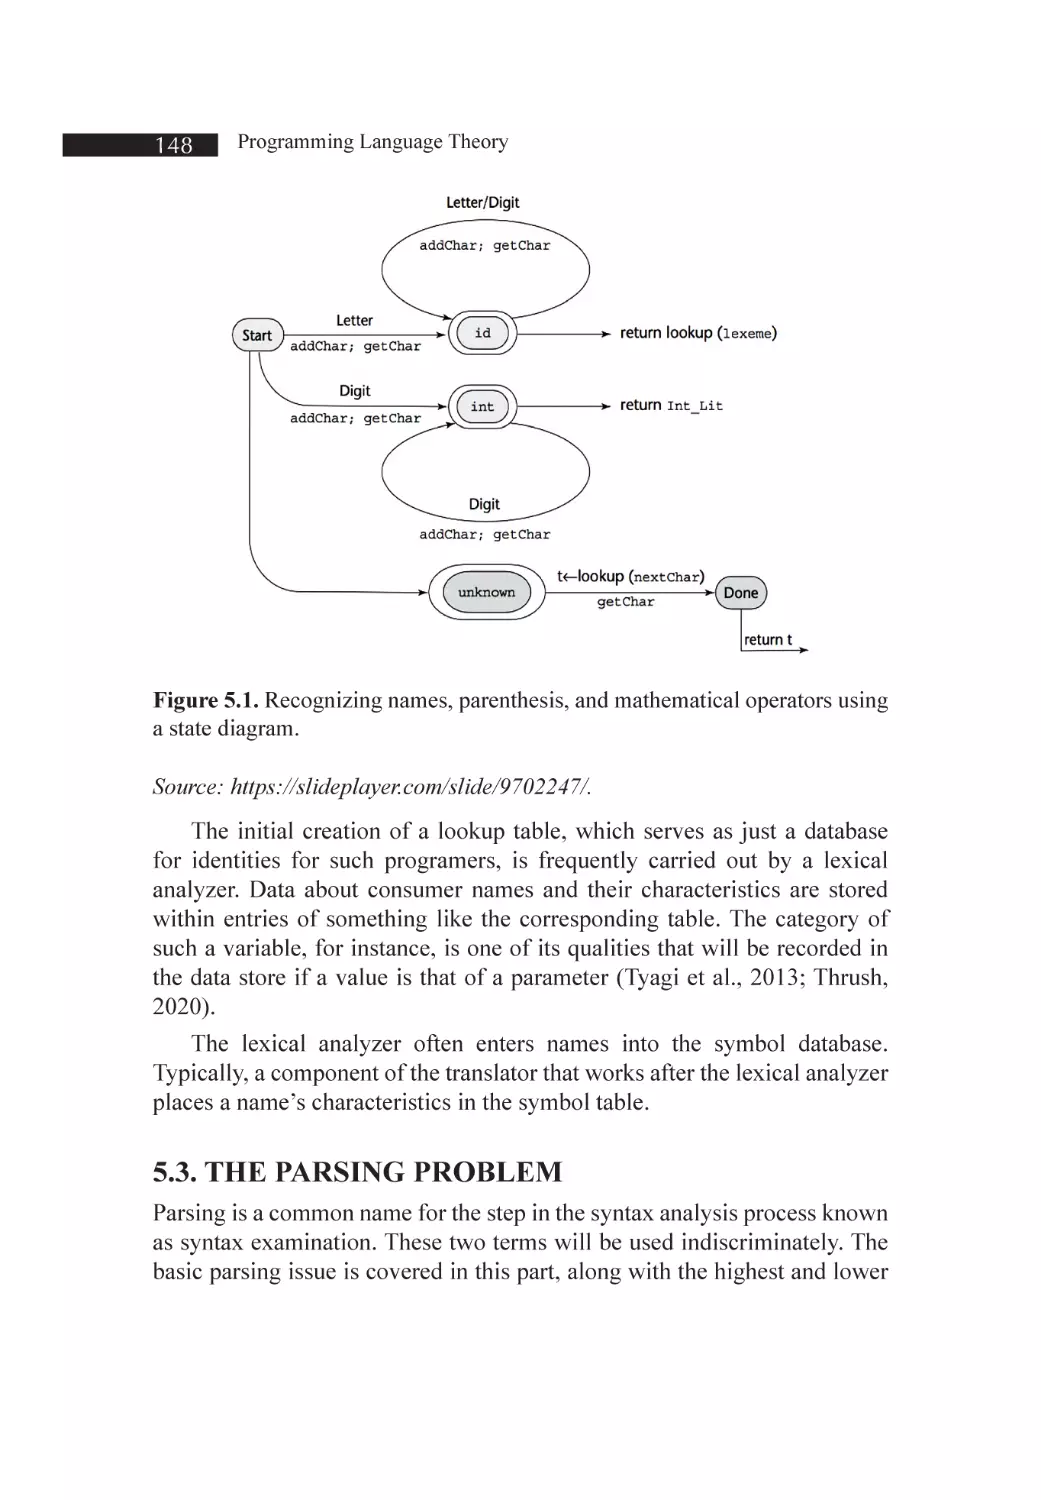 5.3. The Parsing Problem